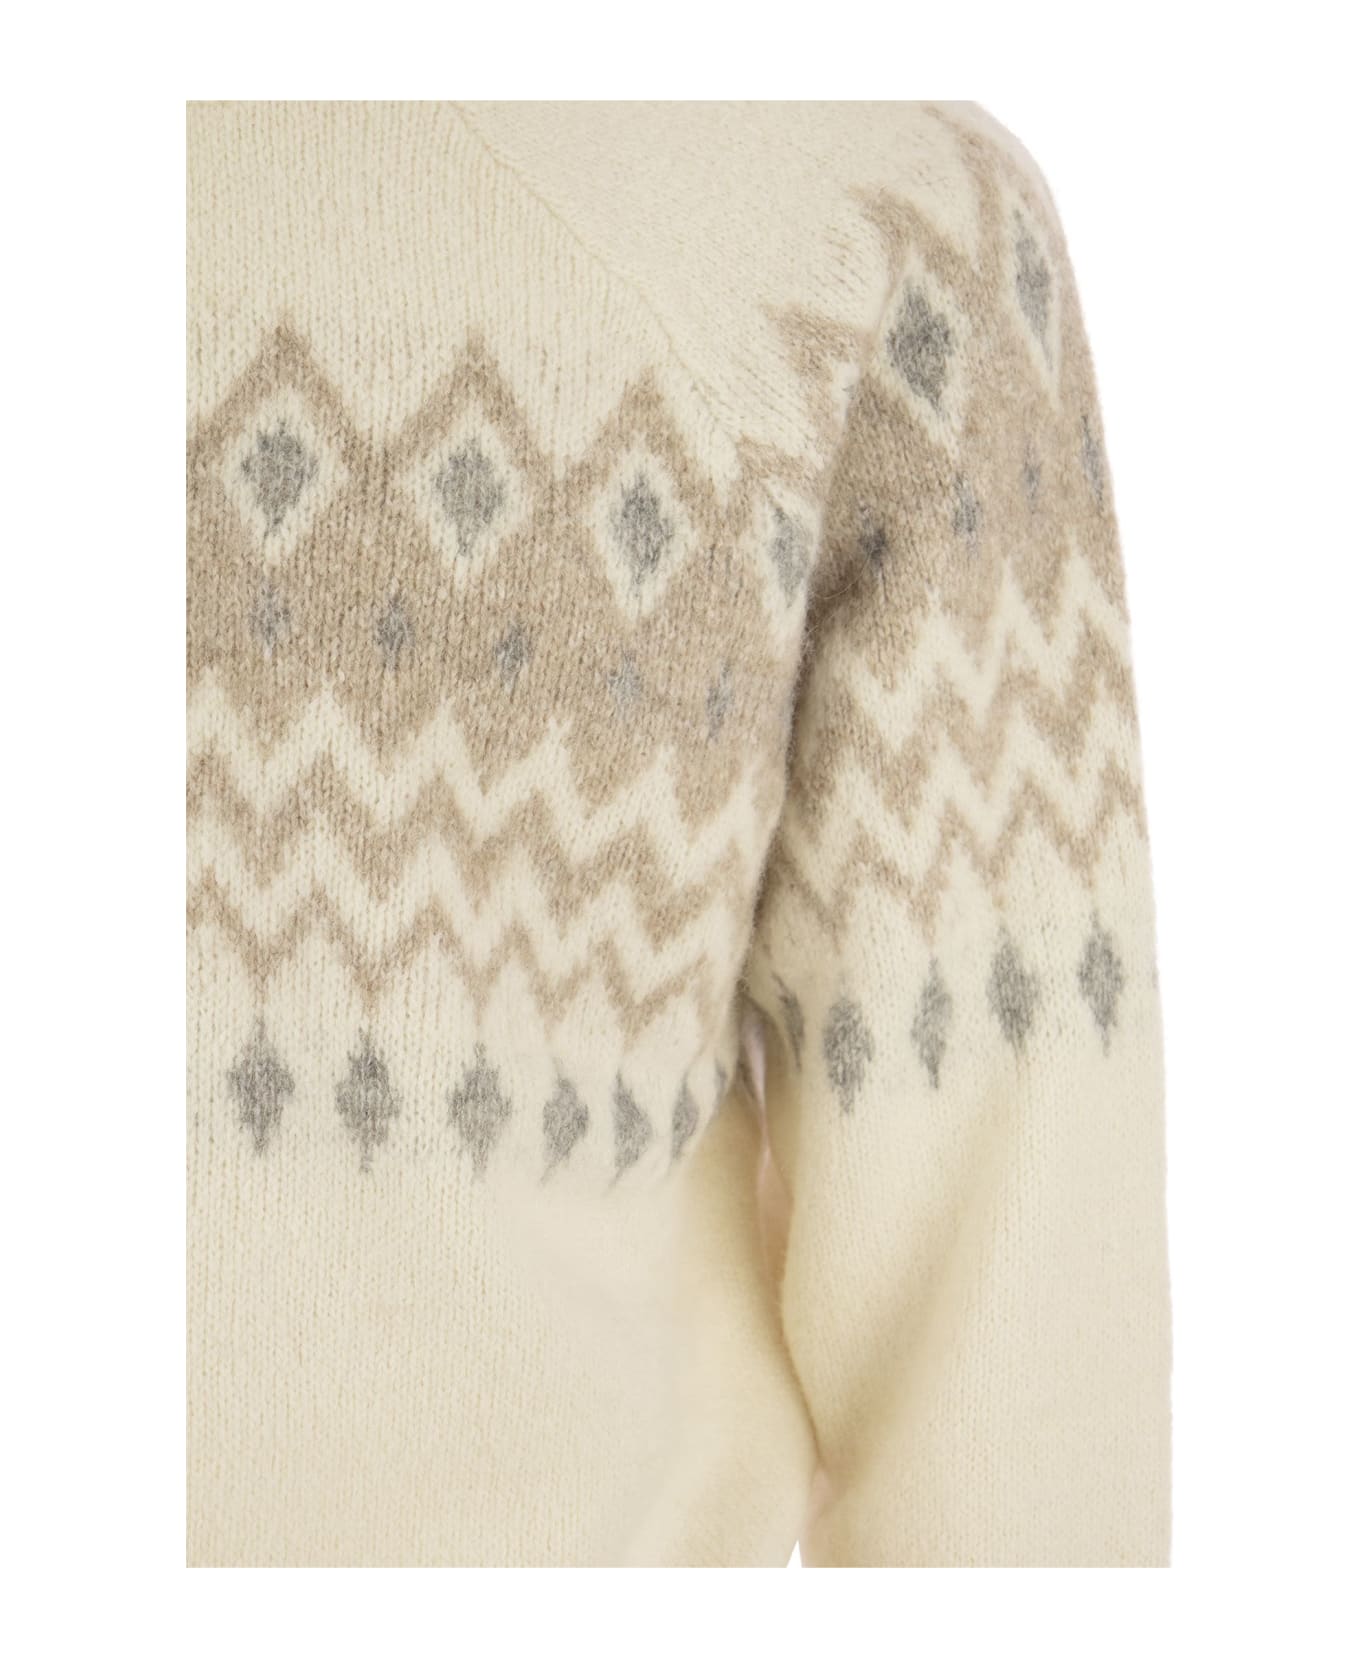 Brunello Cucinelli Icelandic Jacquard Buttoned Sweater - Panama/grey/sand ニットウェア